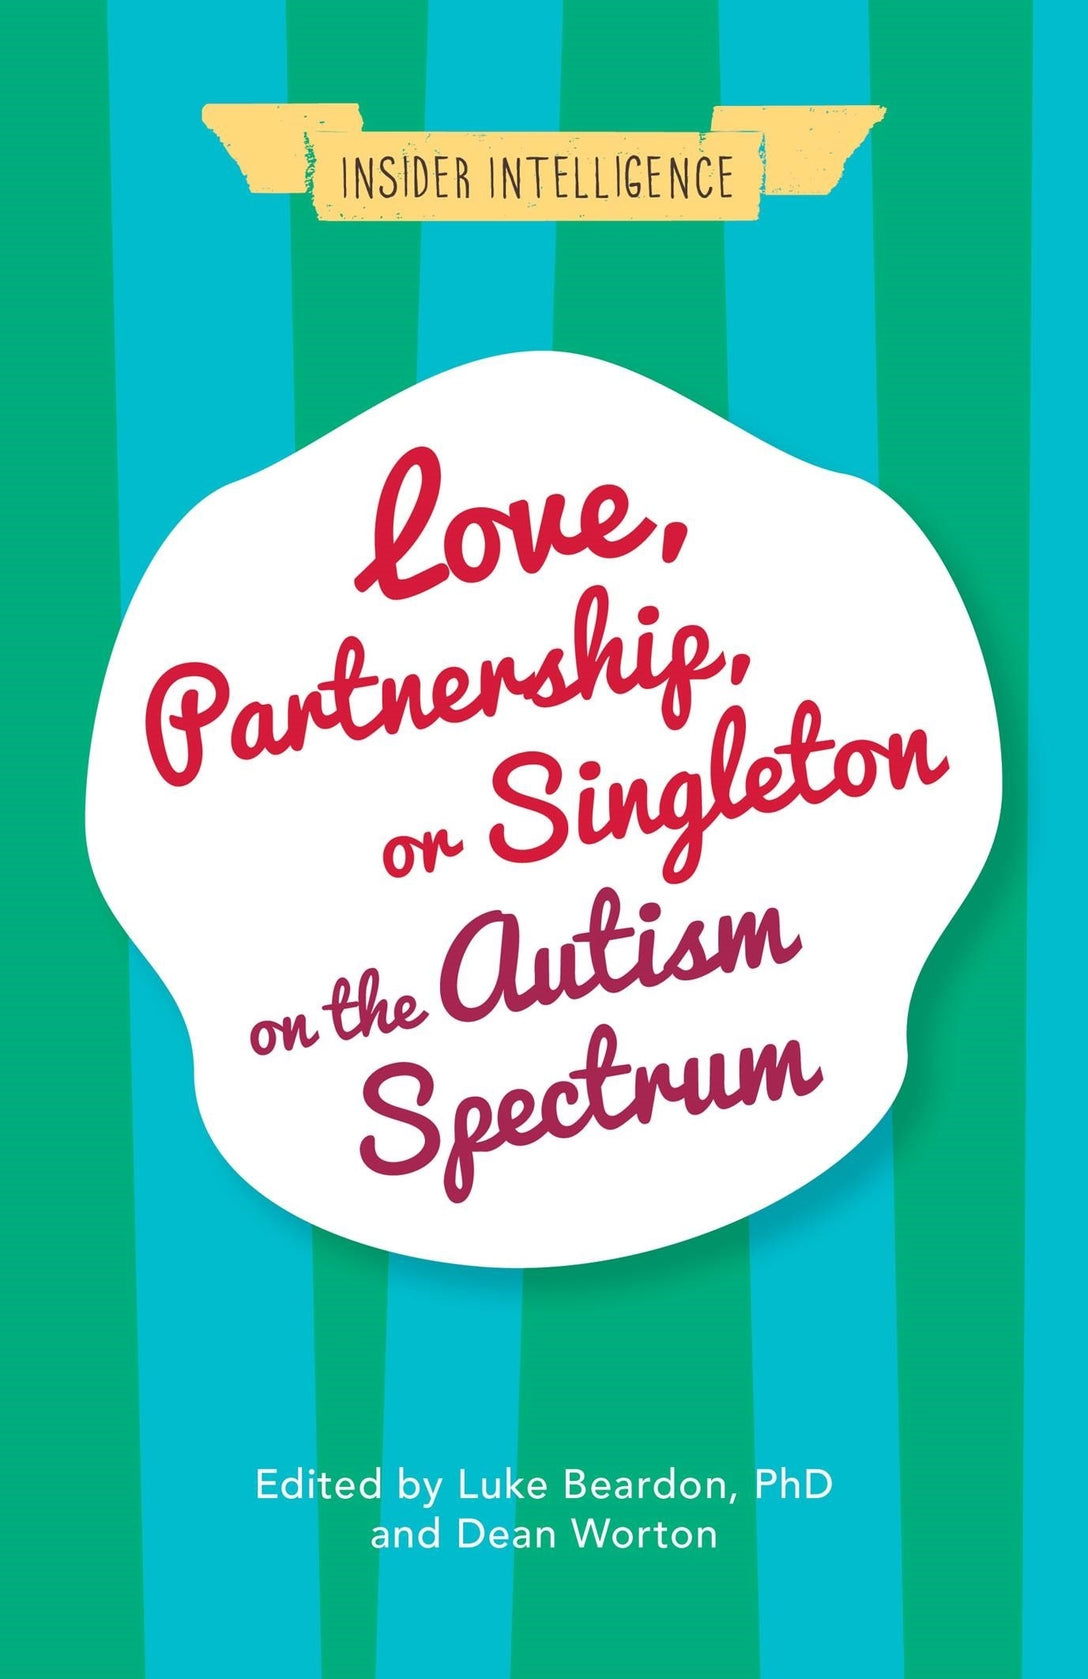 Love, Partnership, or Singleton on the Autism Spectrum by Luke Beardon, Dean Worton, No Author Listed